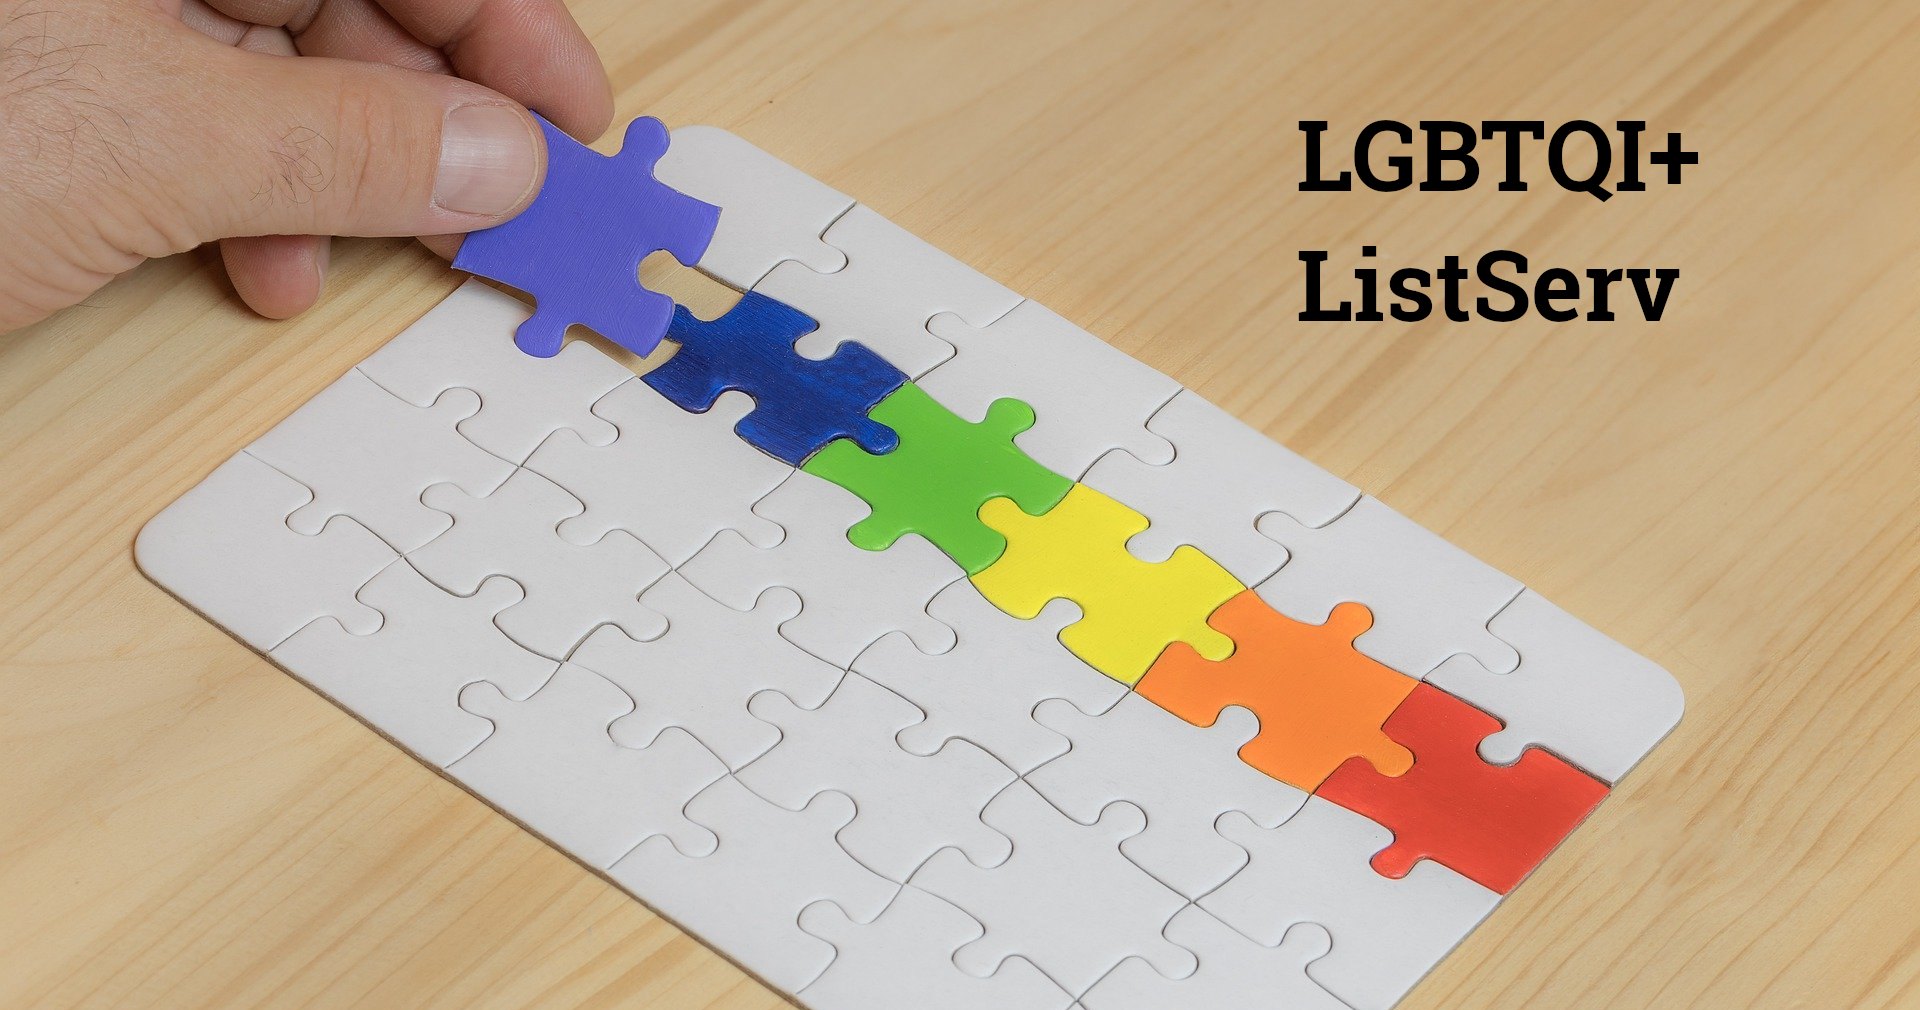 Subscribe today - LGBTQI+ ListServ